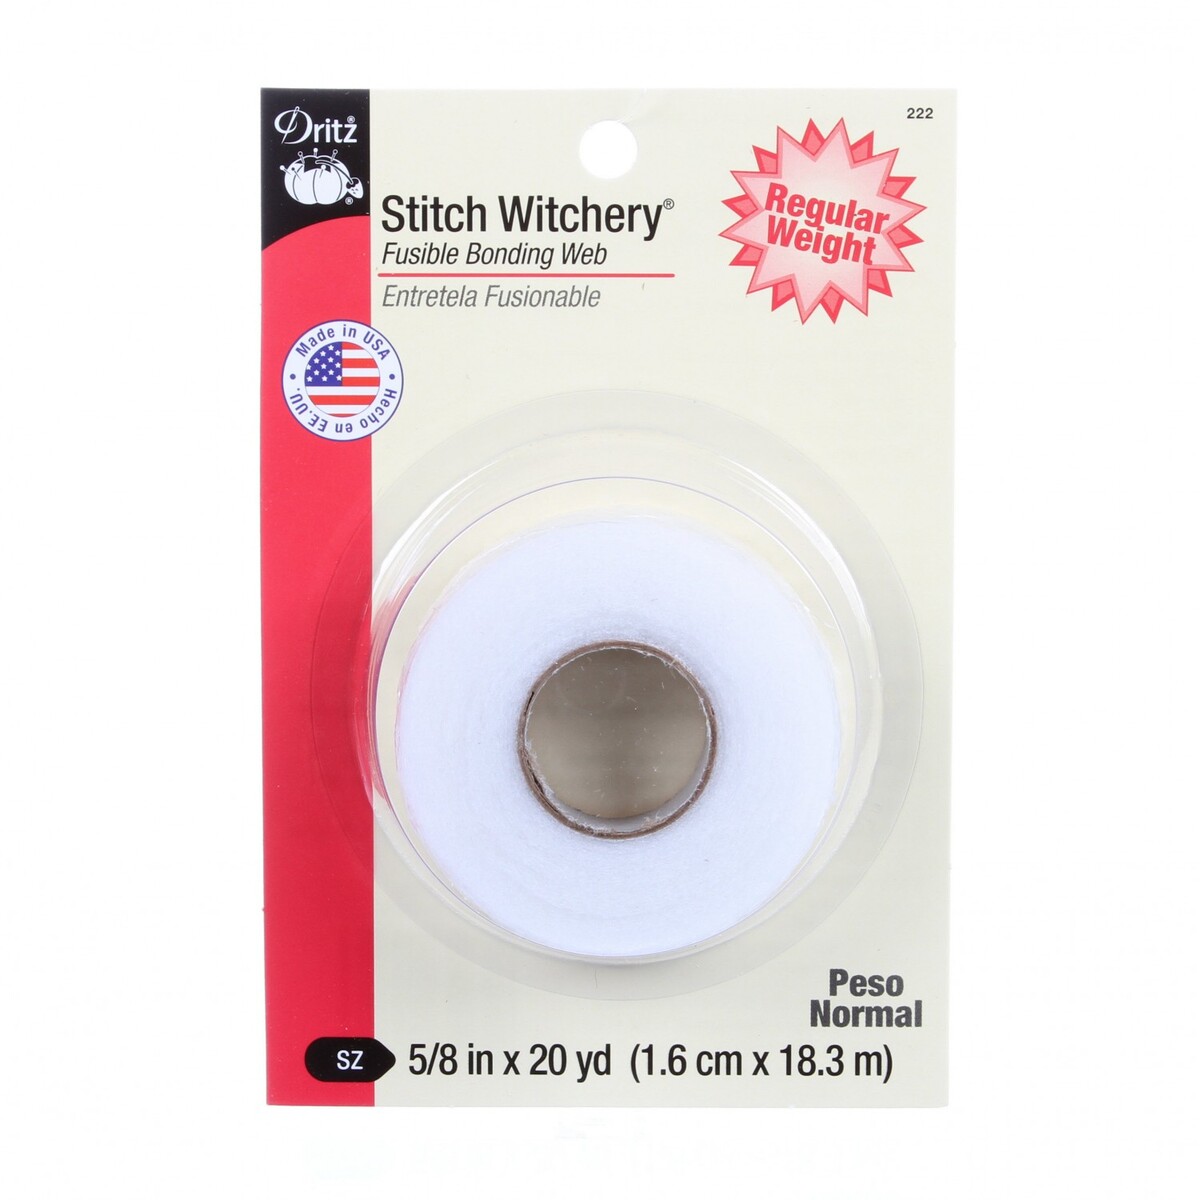 Dritz Regular Stitch Witchery - Stitch Witchery - Adhesives - Notions